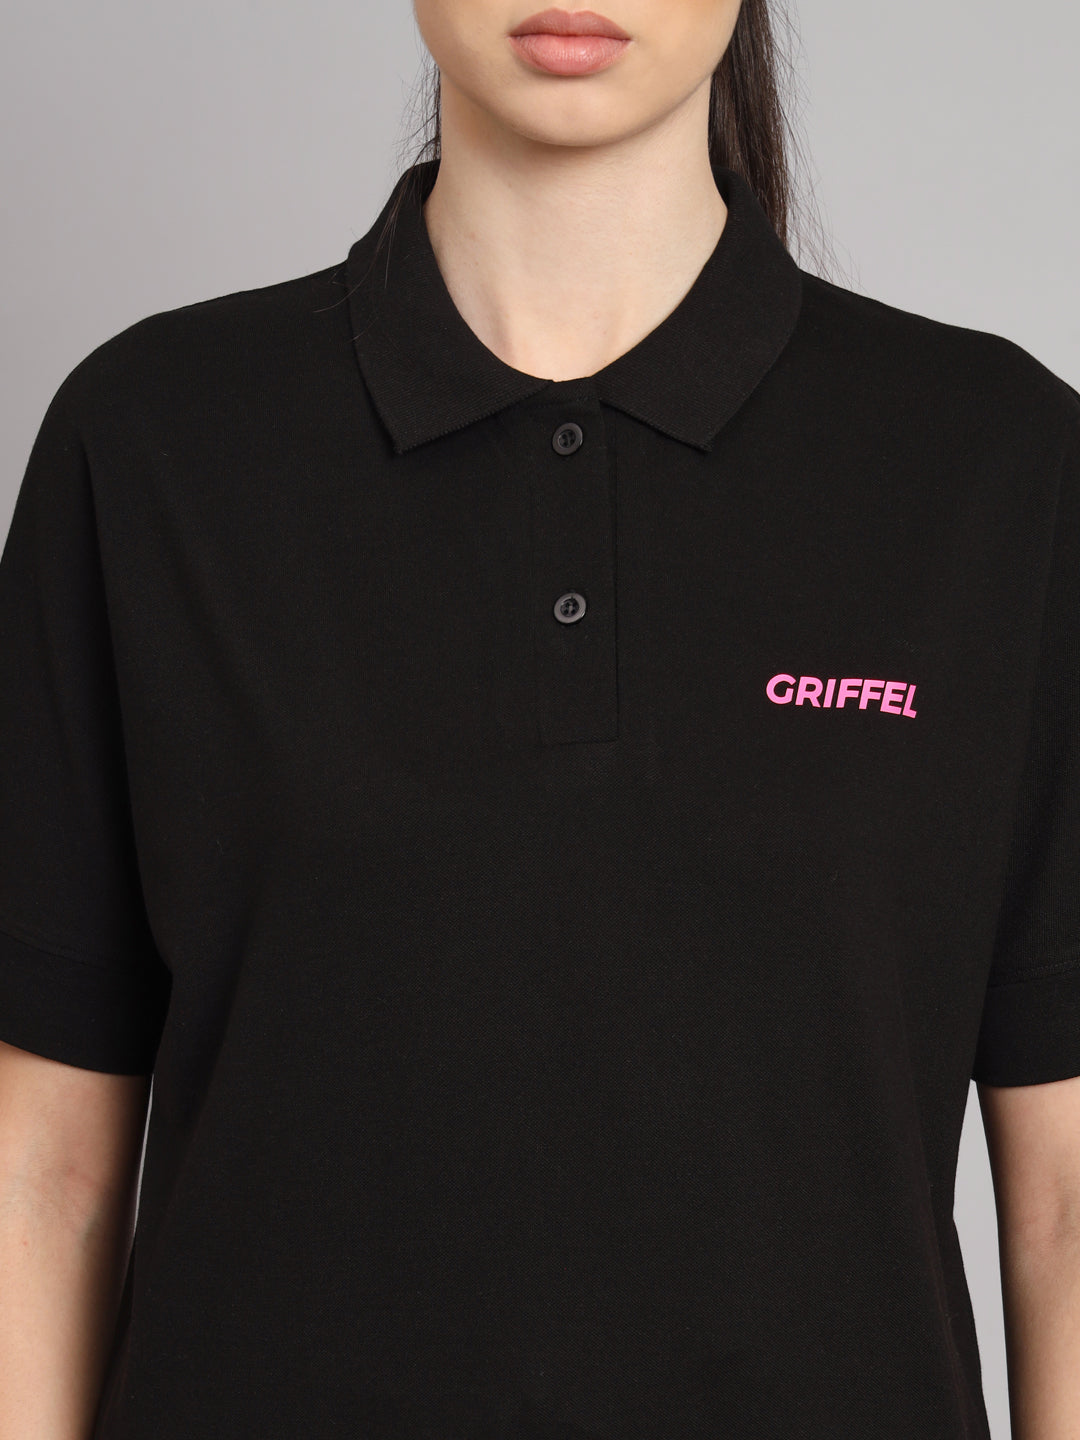 GRIFFEL Women Basic Solid Black Polo T-shirt - griffel